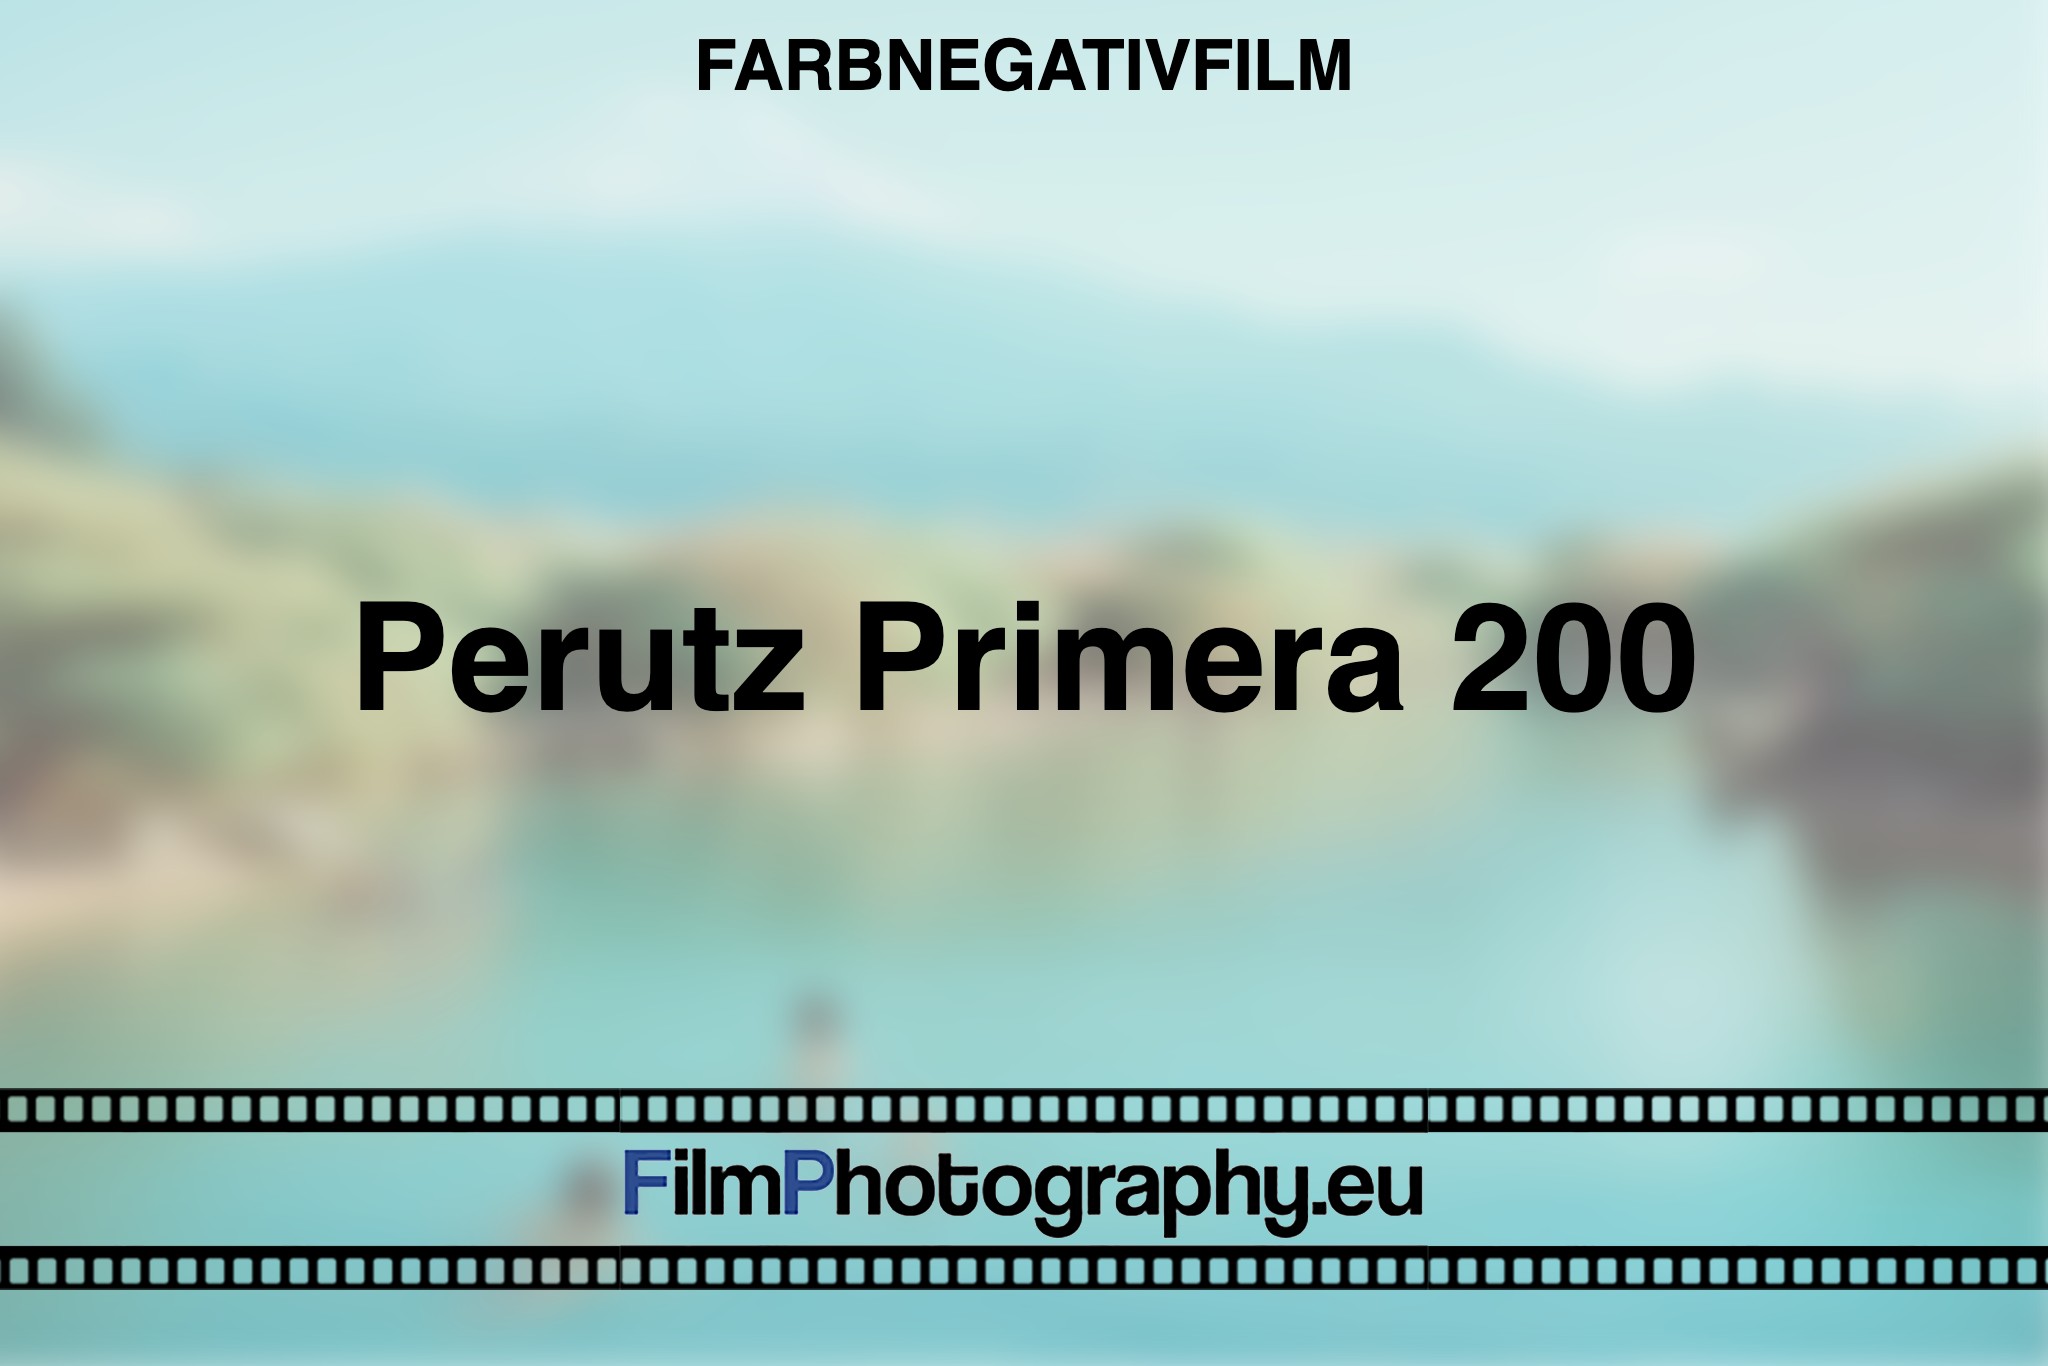 perutz-primera-200-farbnegativfilm-bnv